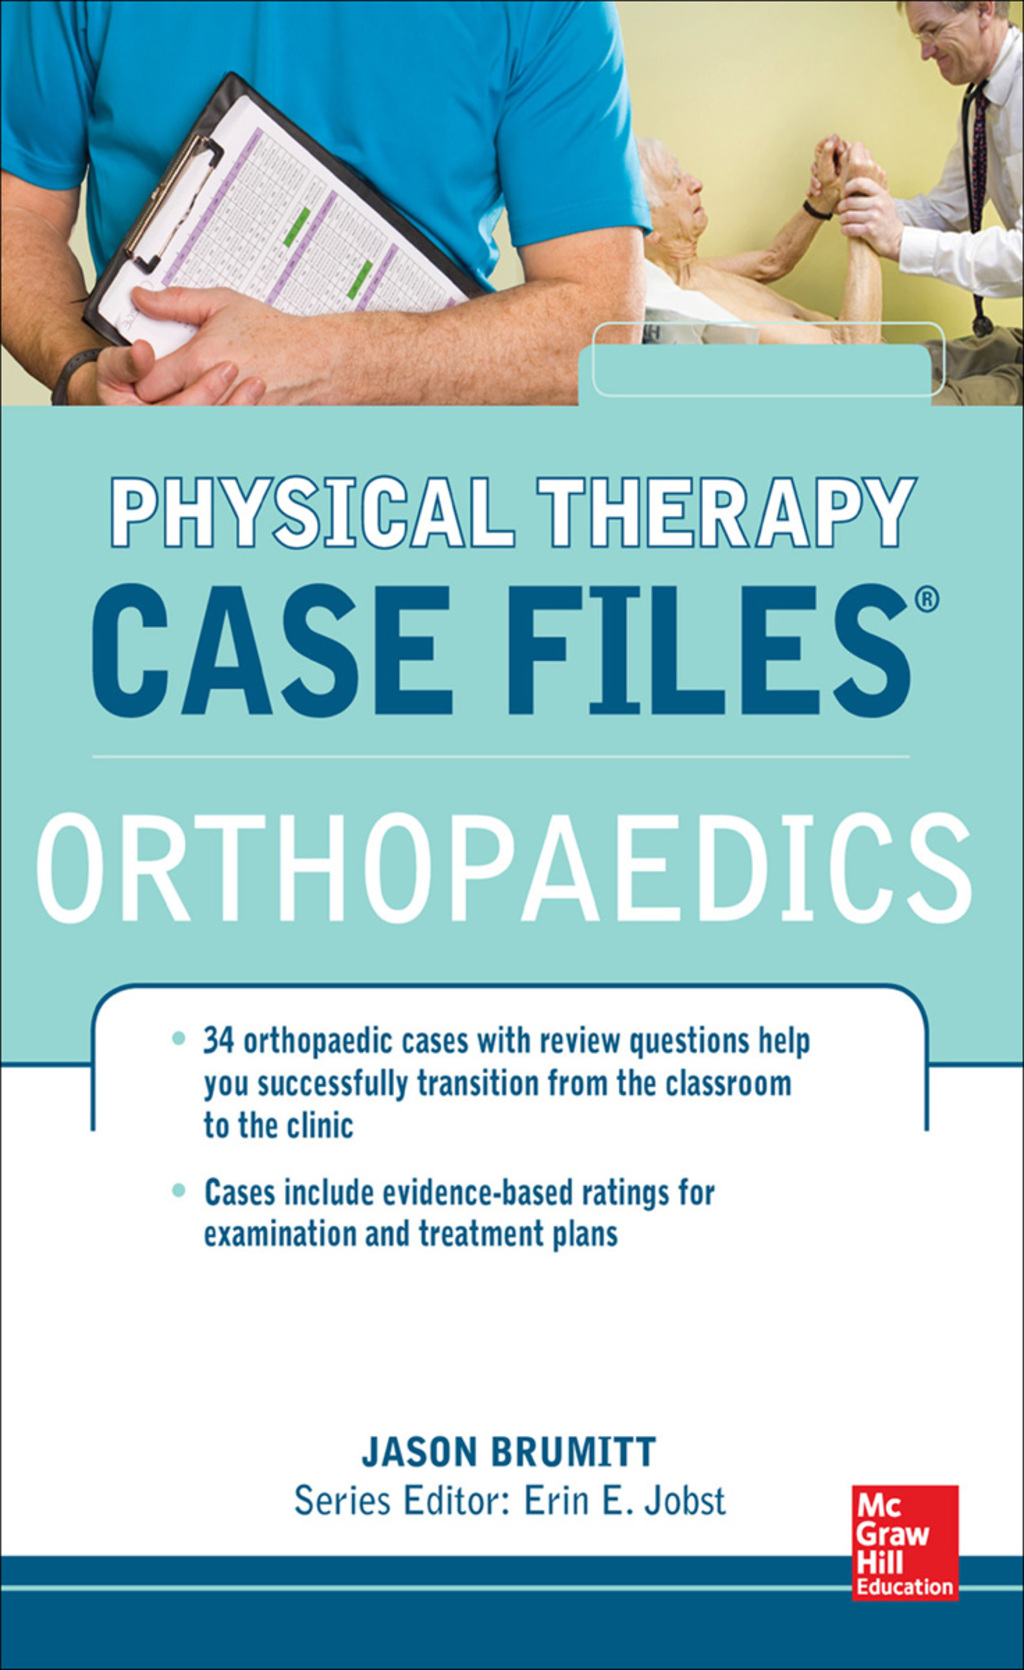 Physical Therapy Case Files: Orthopaedics (eBook) - Jason Brumitt; Erin E. Jobst